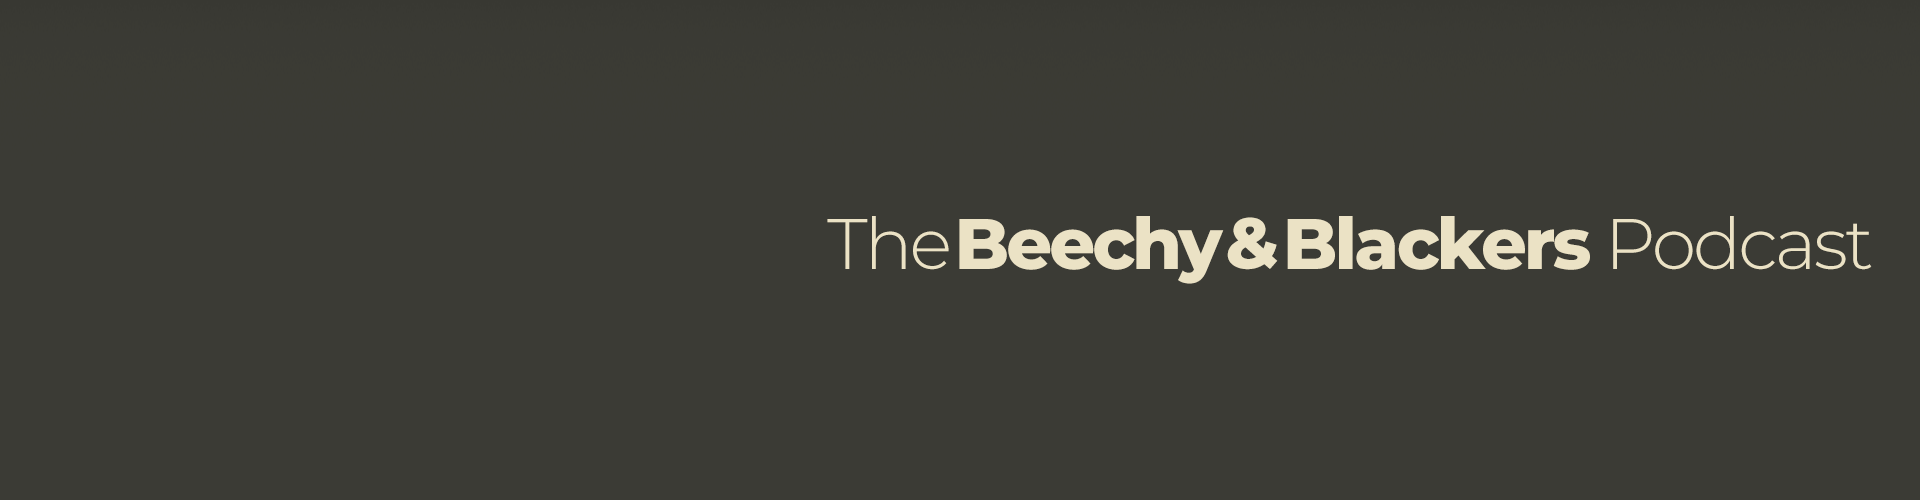 The Beechy & Blackers Podcast